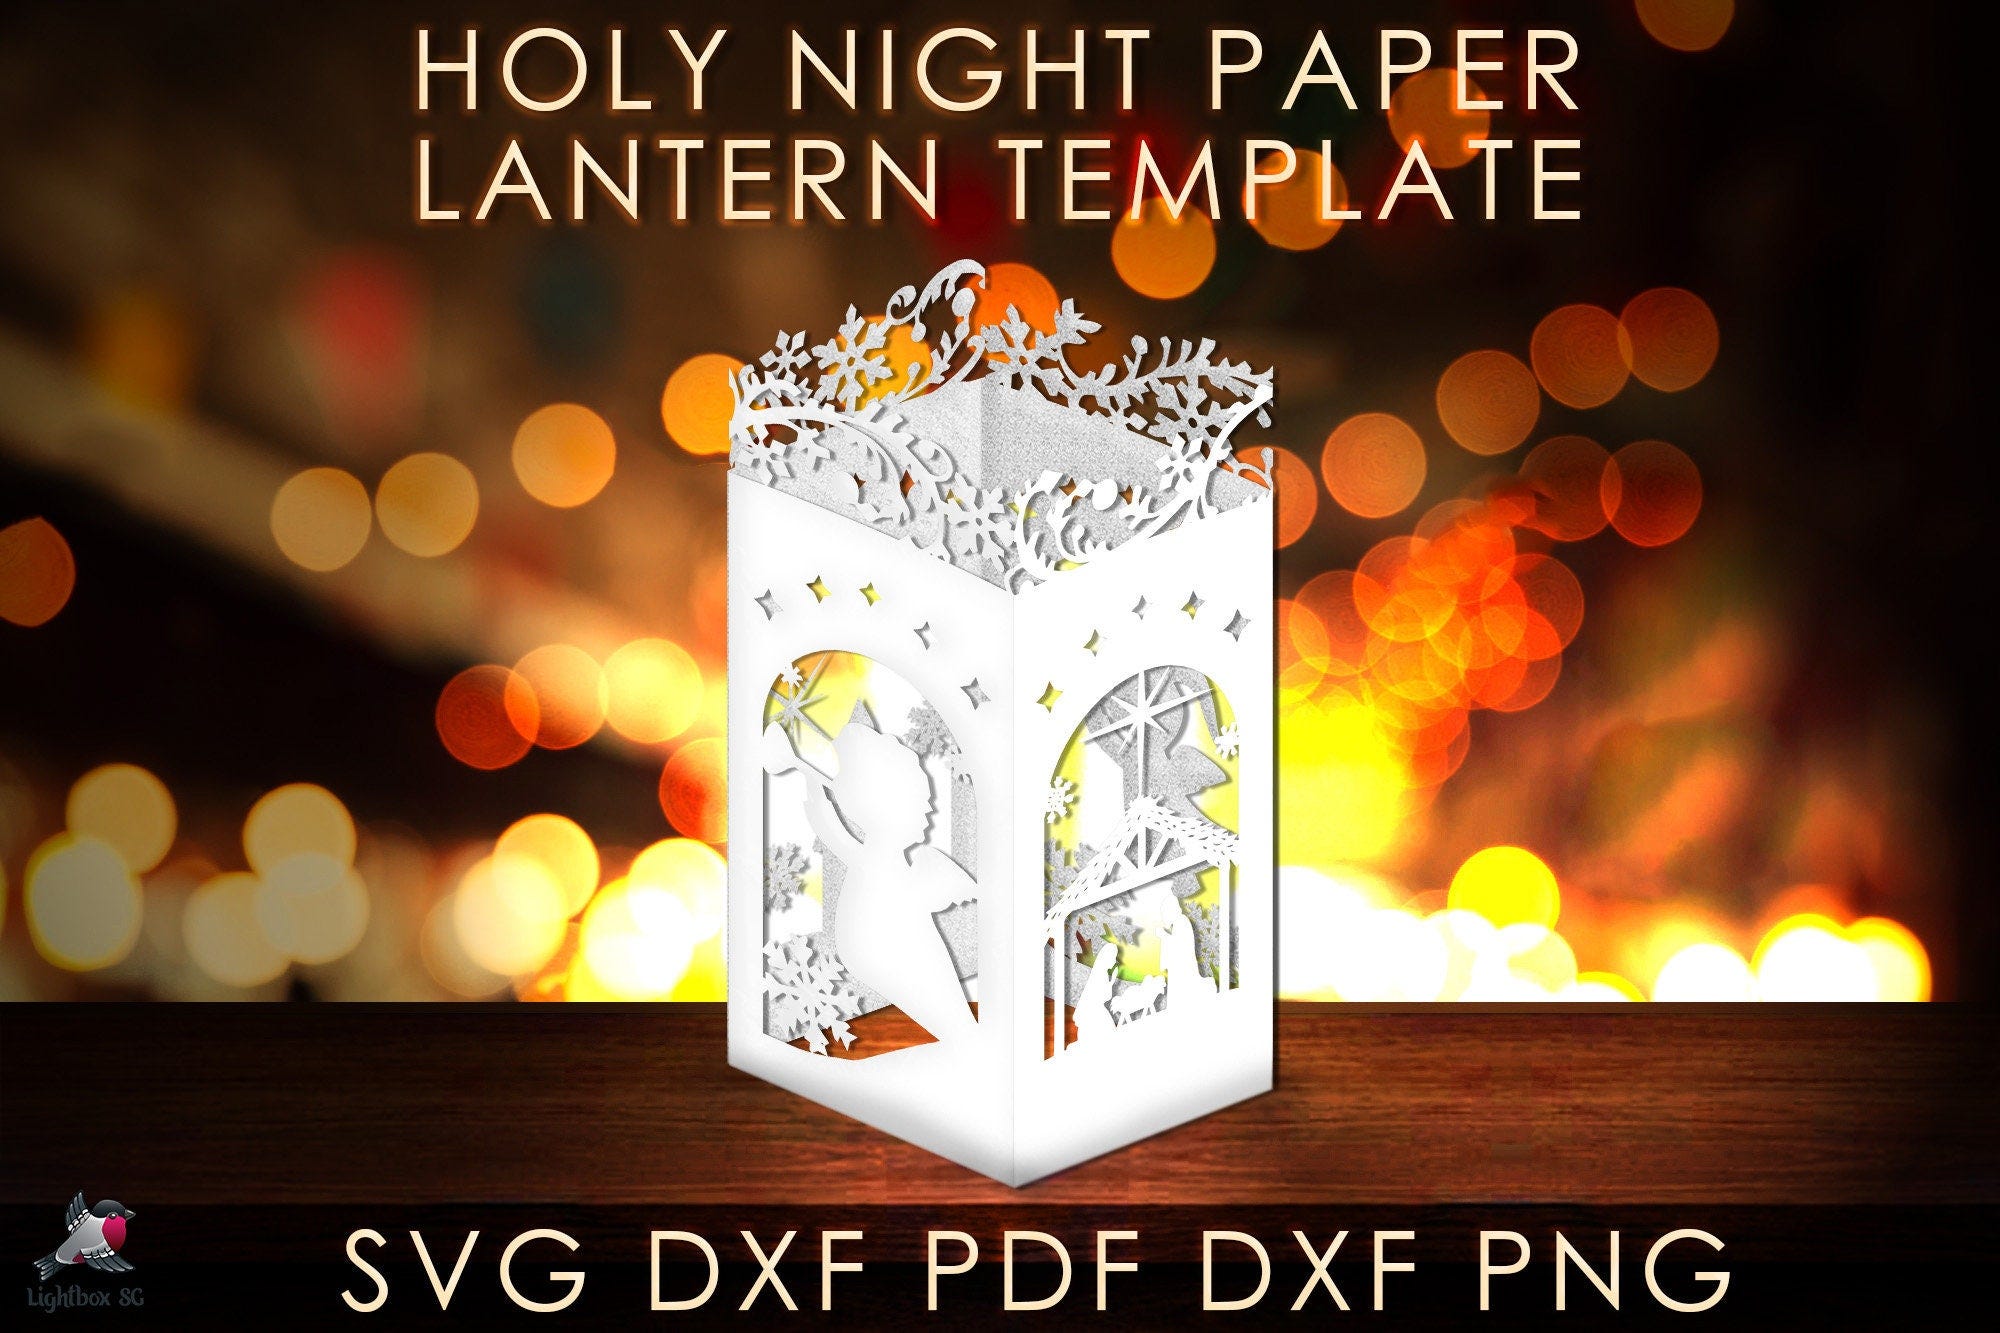 Holy night lantern Template, Nativity scene paper cut diy lantern papercraft, christmas candles template, Jesus birth cricut svg eps dxf art